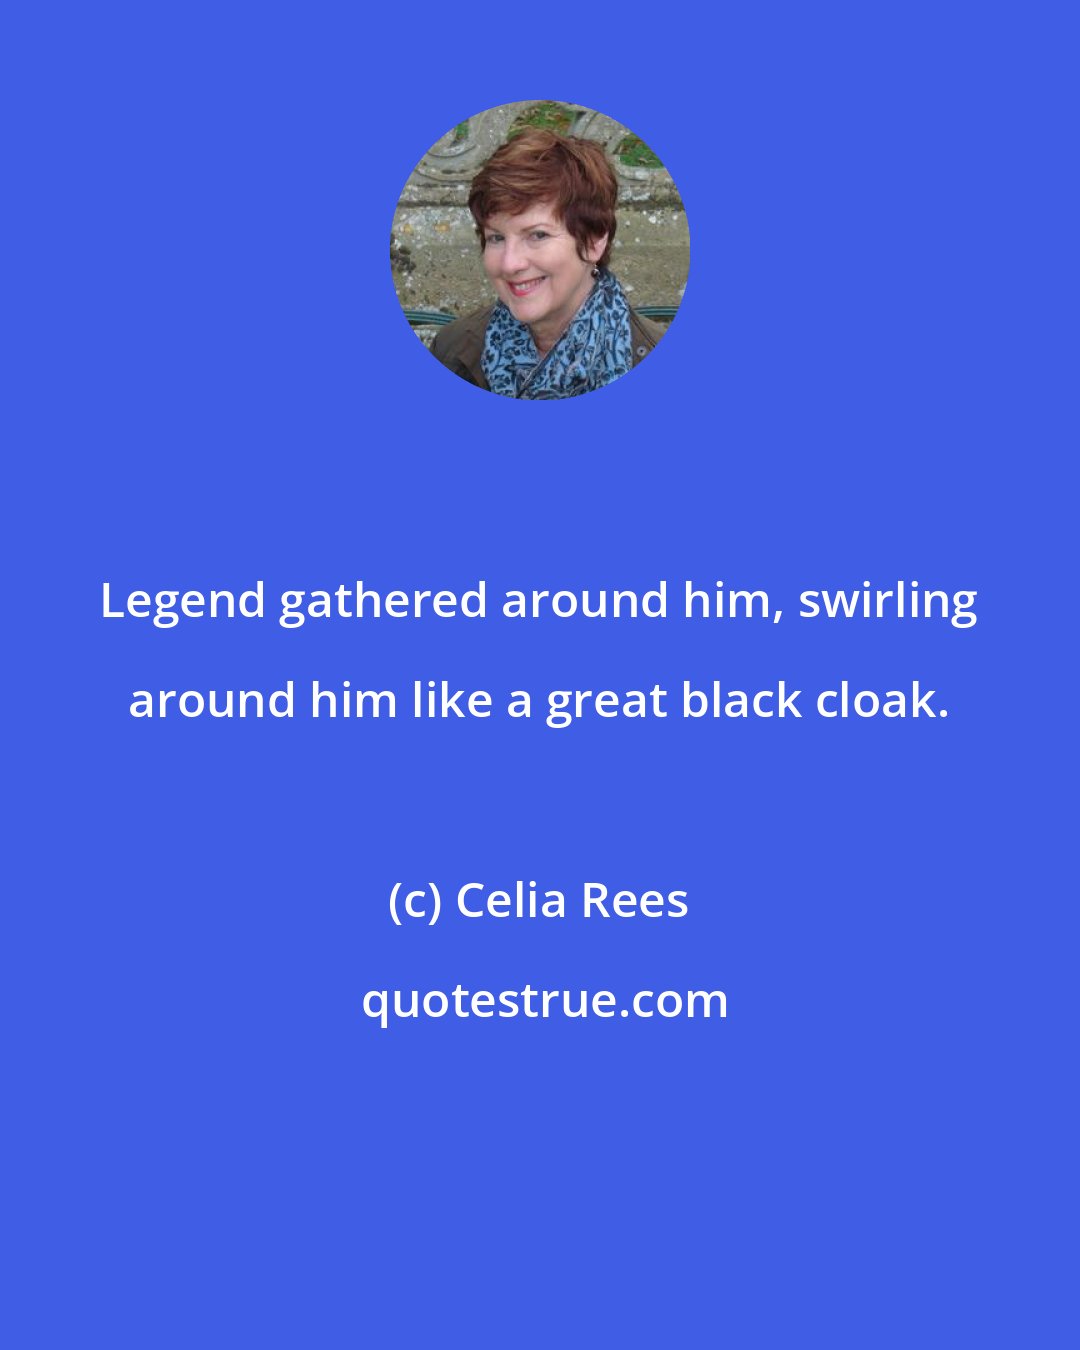 Celia Rees: Legend gathered around him, swirling around him like a great black cloak.